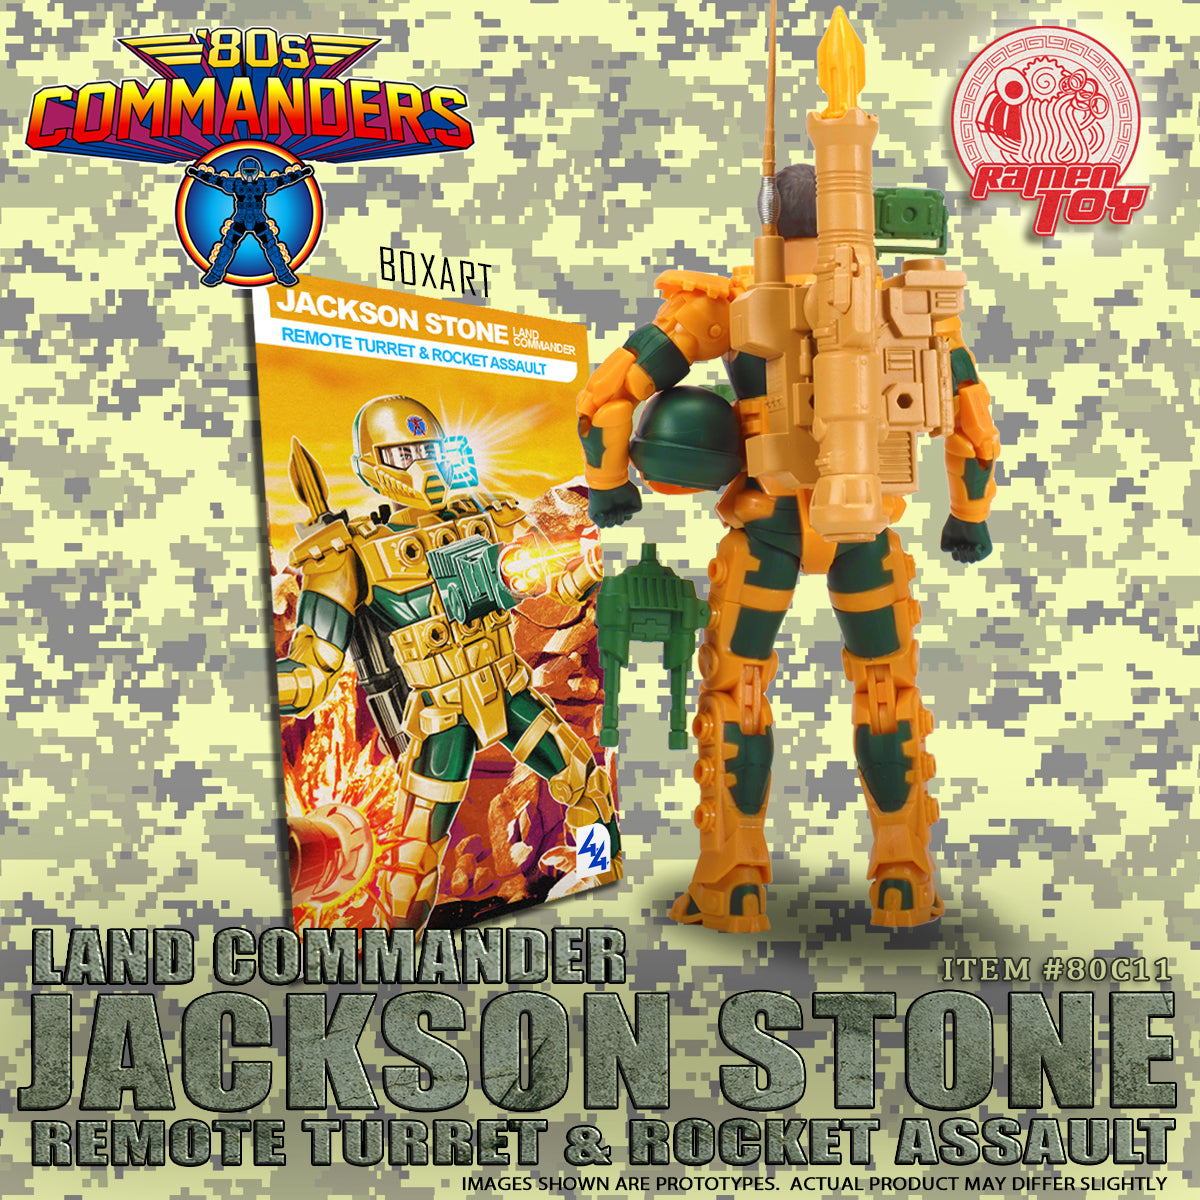 ITEM #80C11 - [80s Commanders] LAND COMMANDER JACKSON STONE - REMOTE TURRET & ROCKET ASSAULT SYSTEM (Pre-Order)